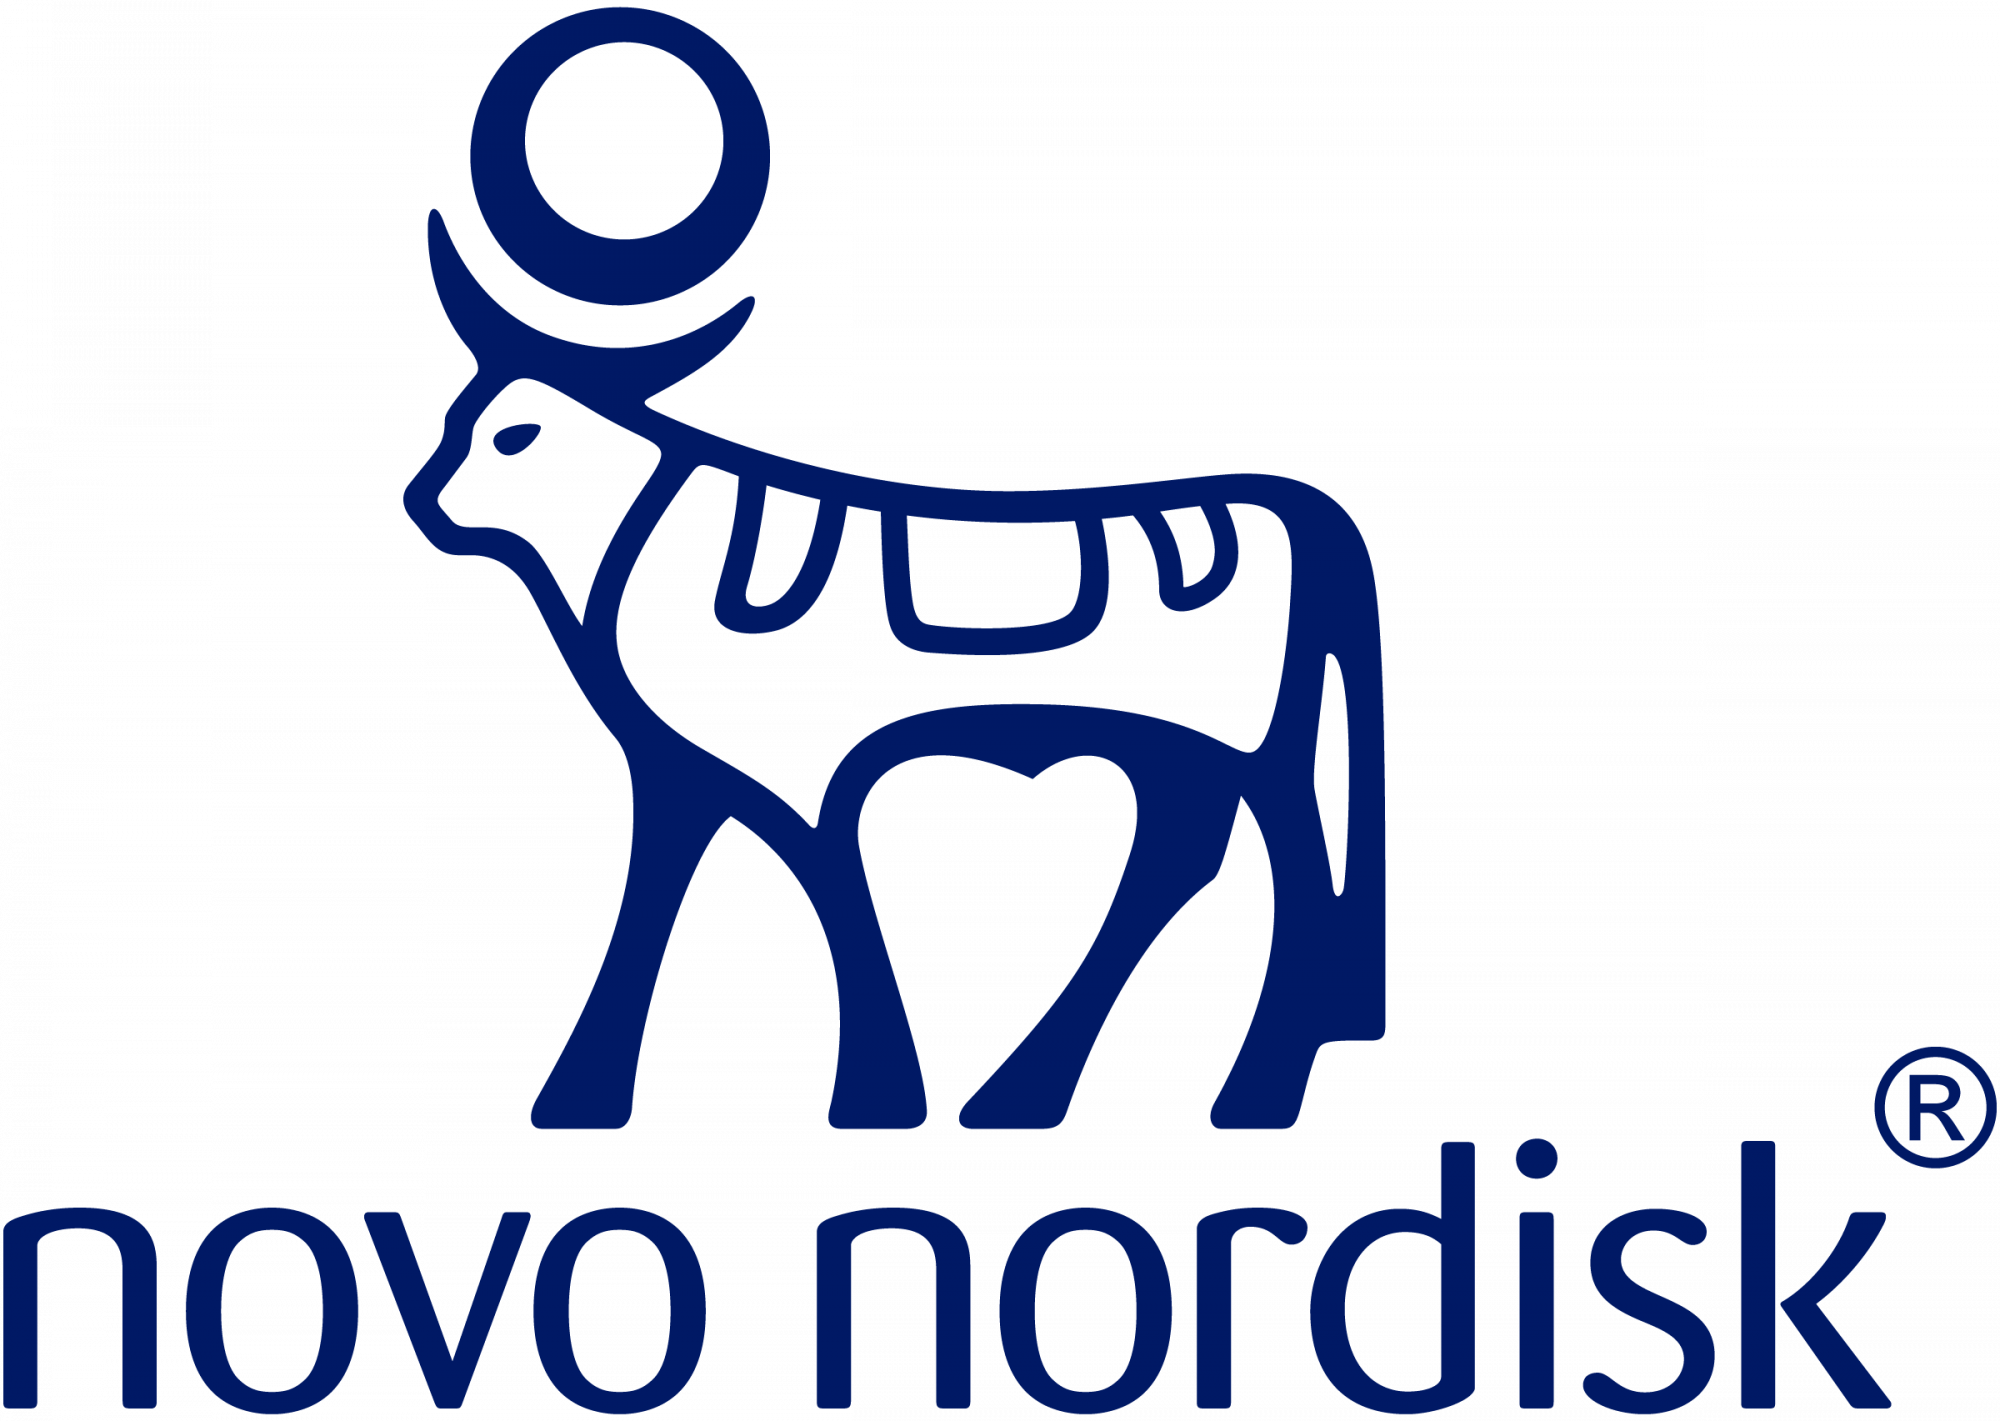 NovoNordisk